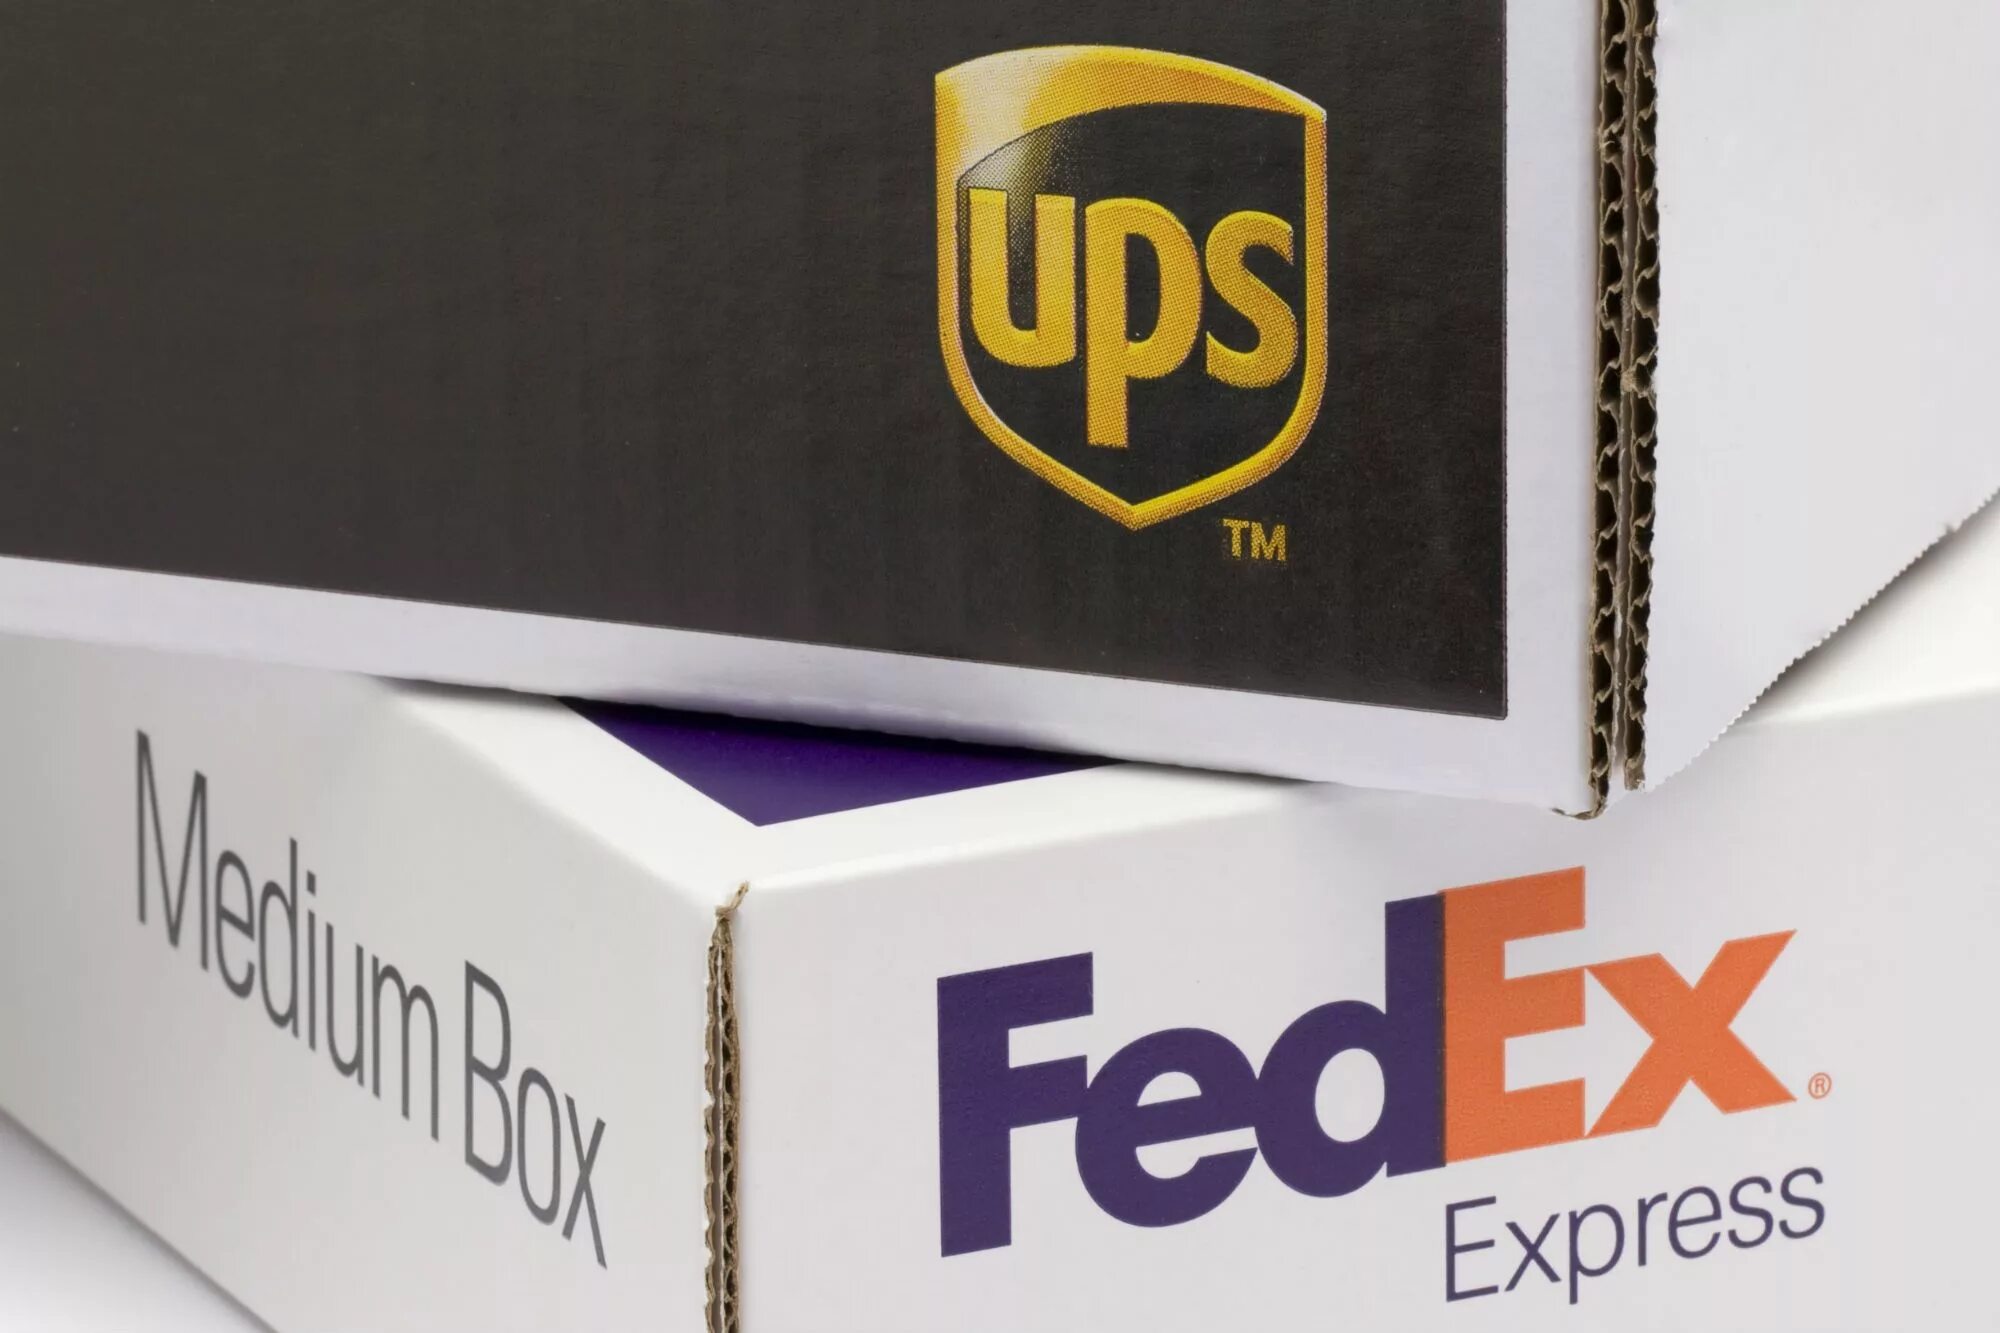 Ups FEDEX. Ups курьер. Ups коробки. Ups Express Box. United box